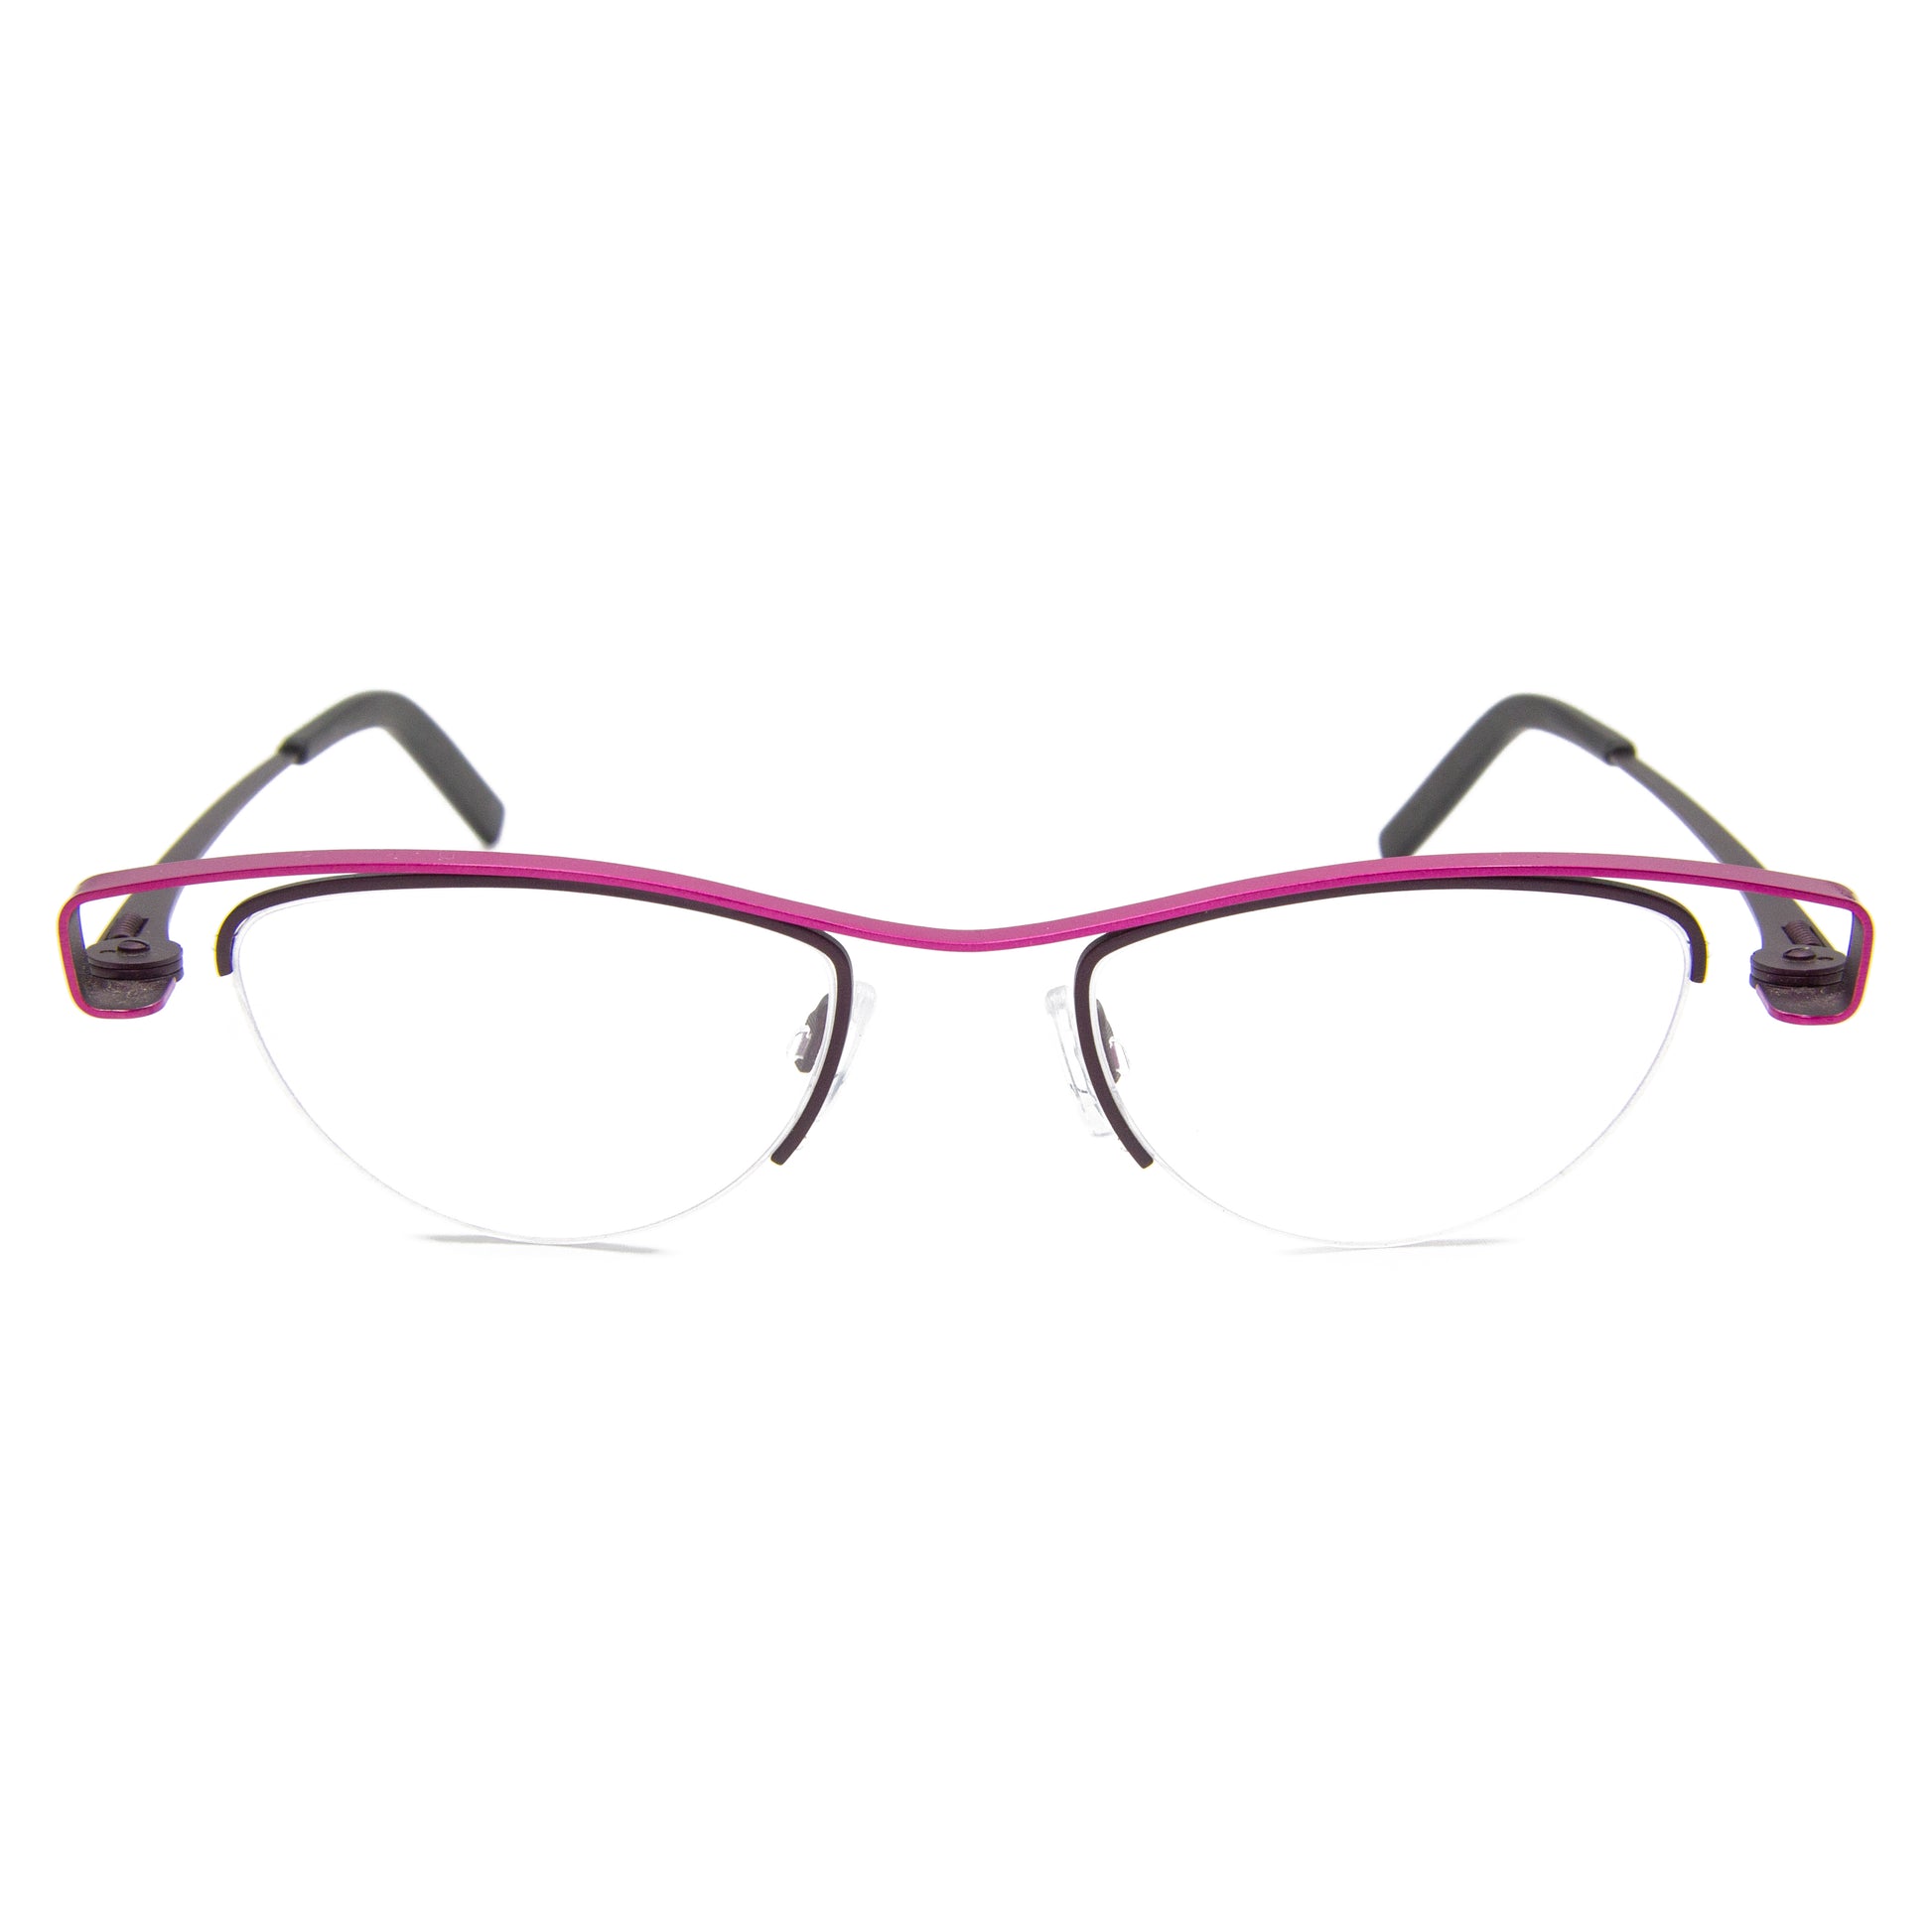 Theo - Eyewear - Knoedel - Glasses